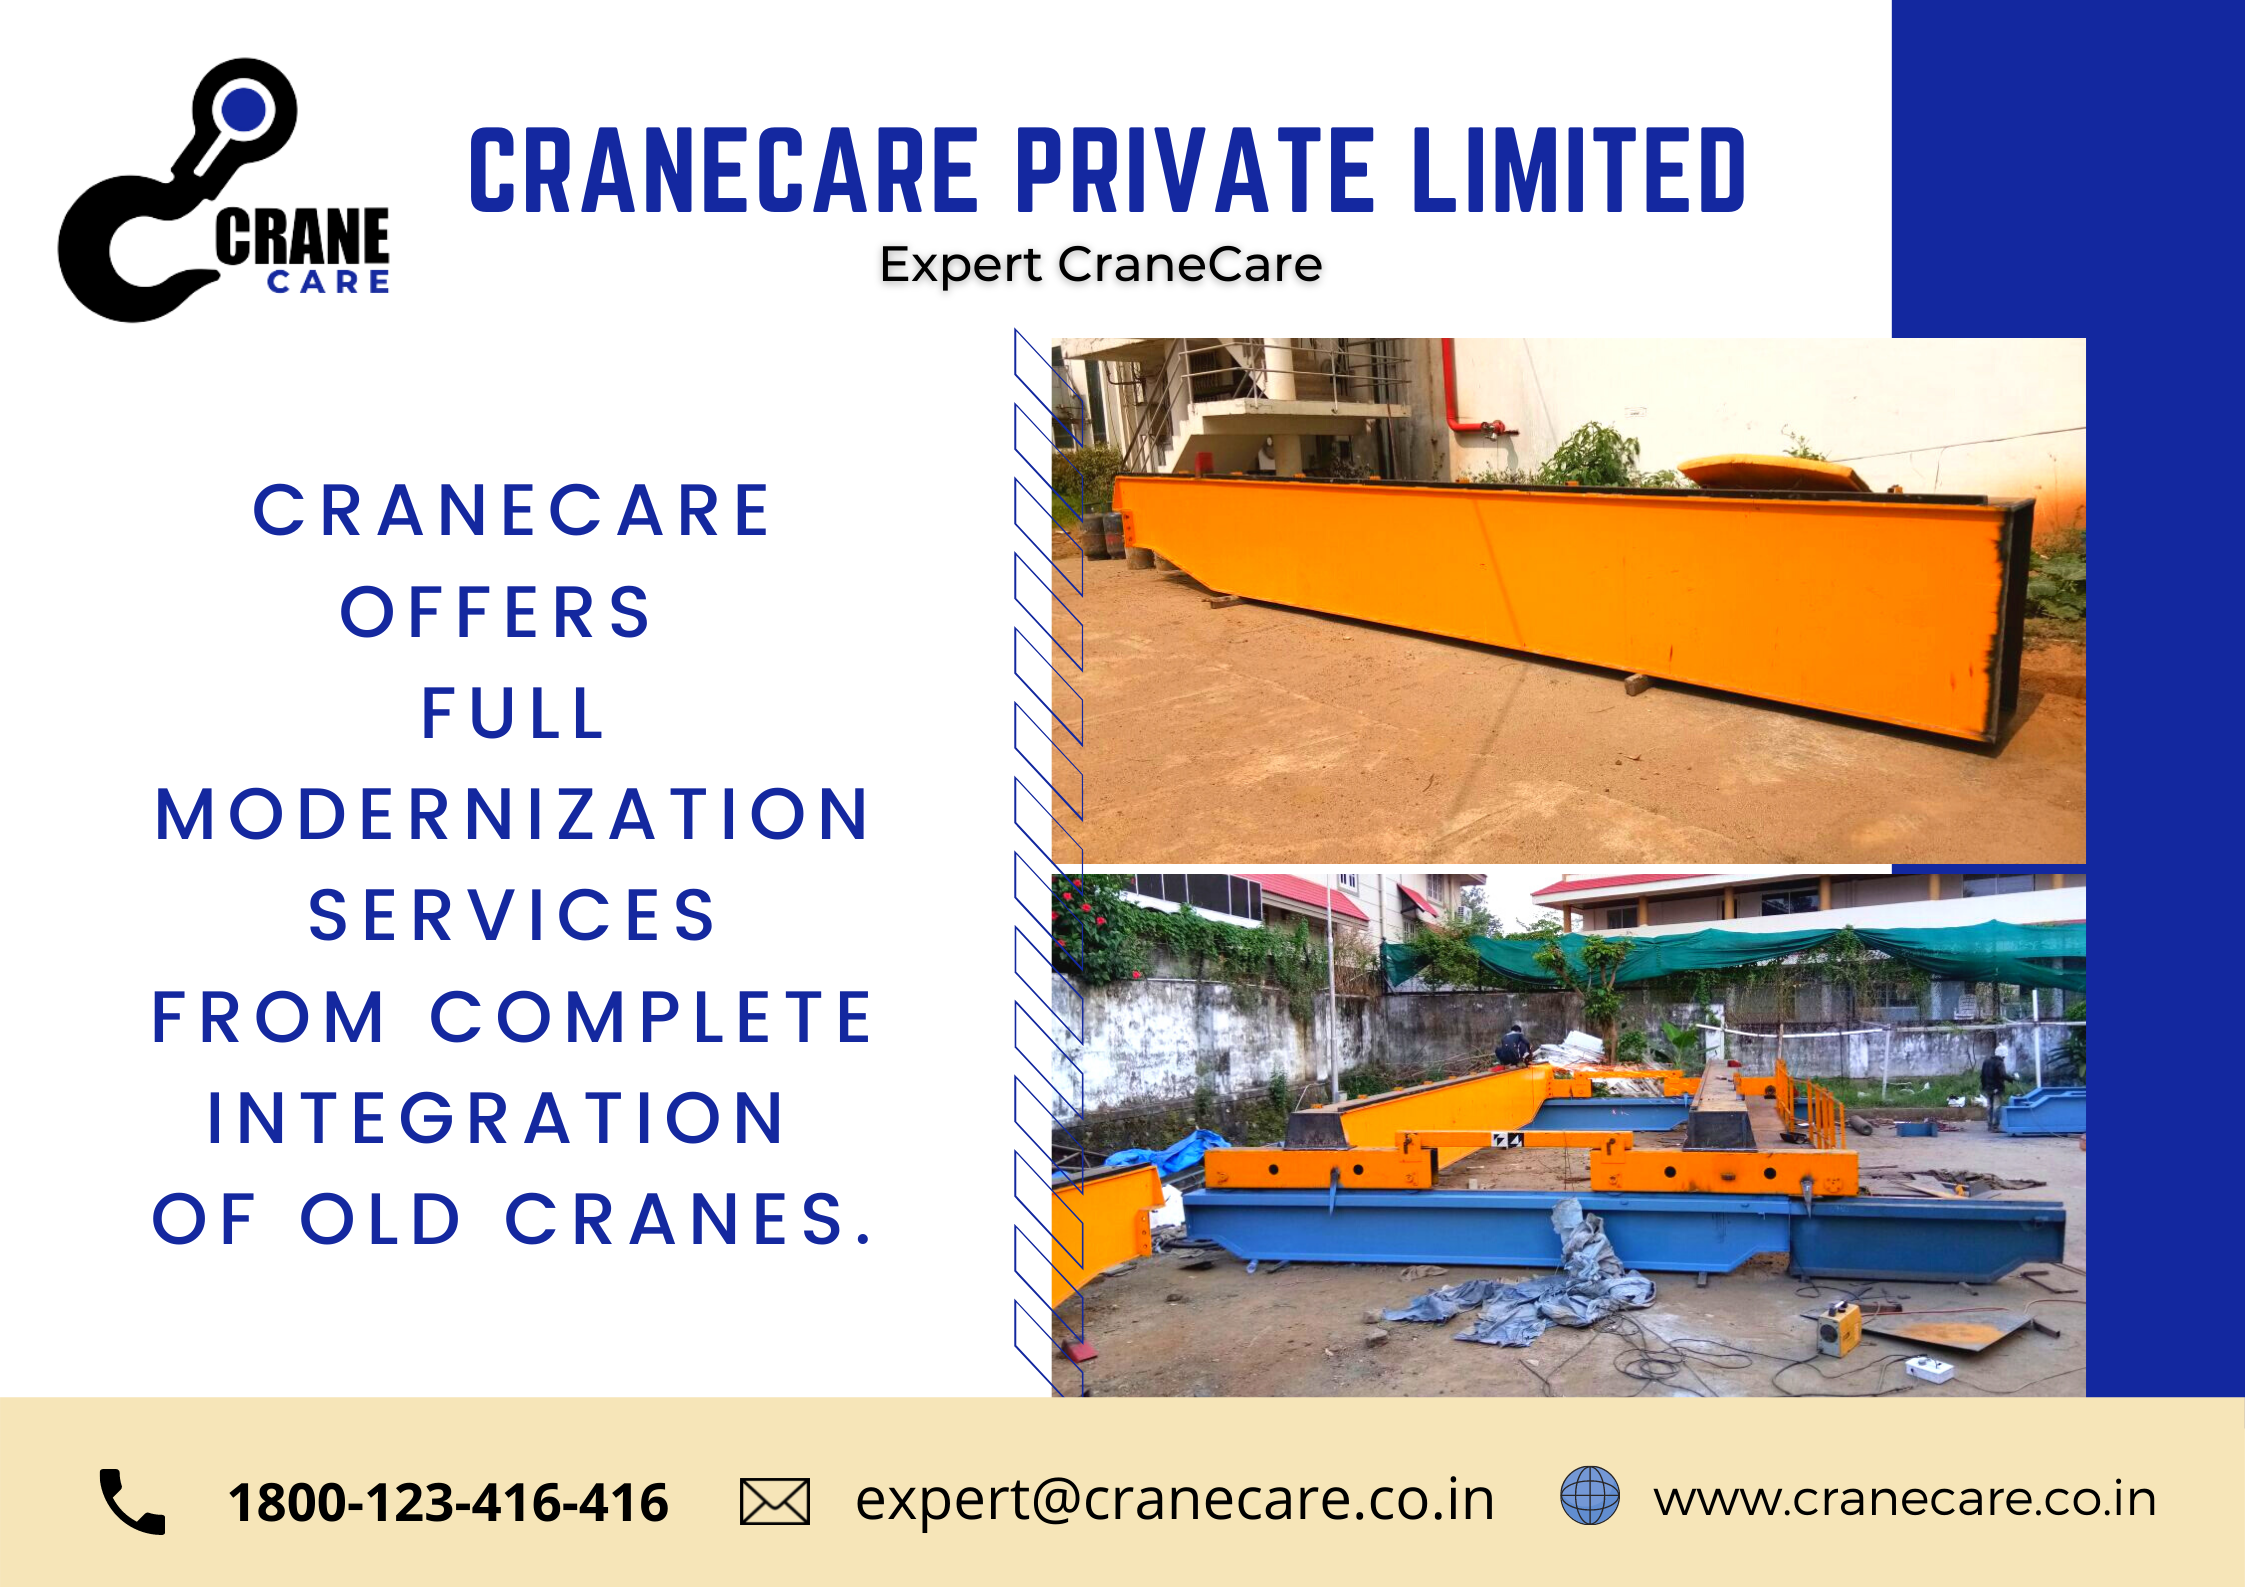 Cranecare Offers Full Modernization